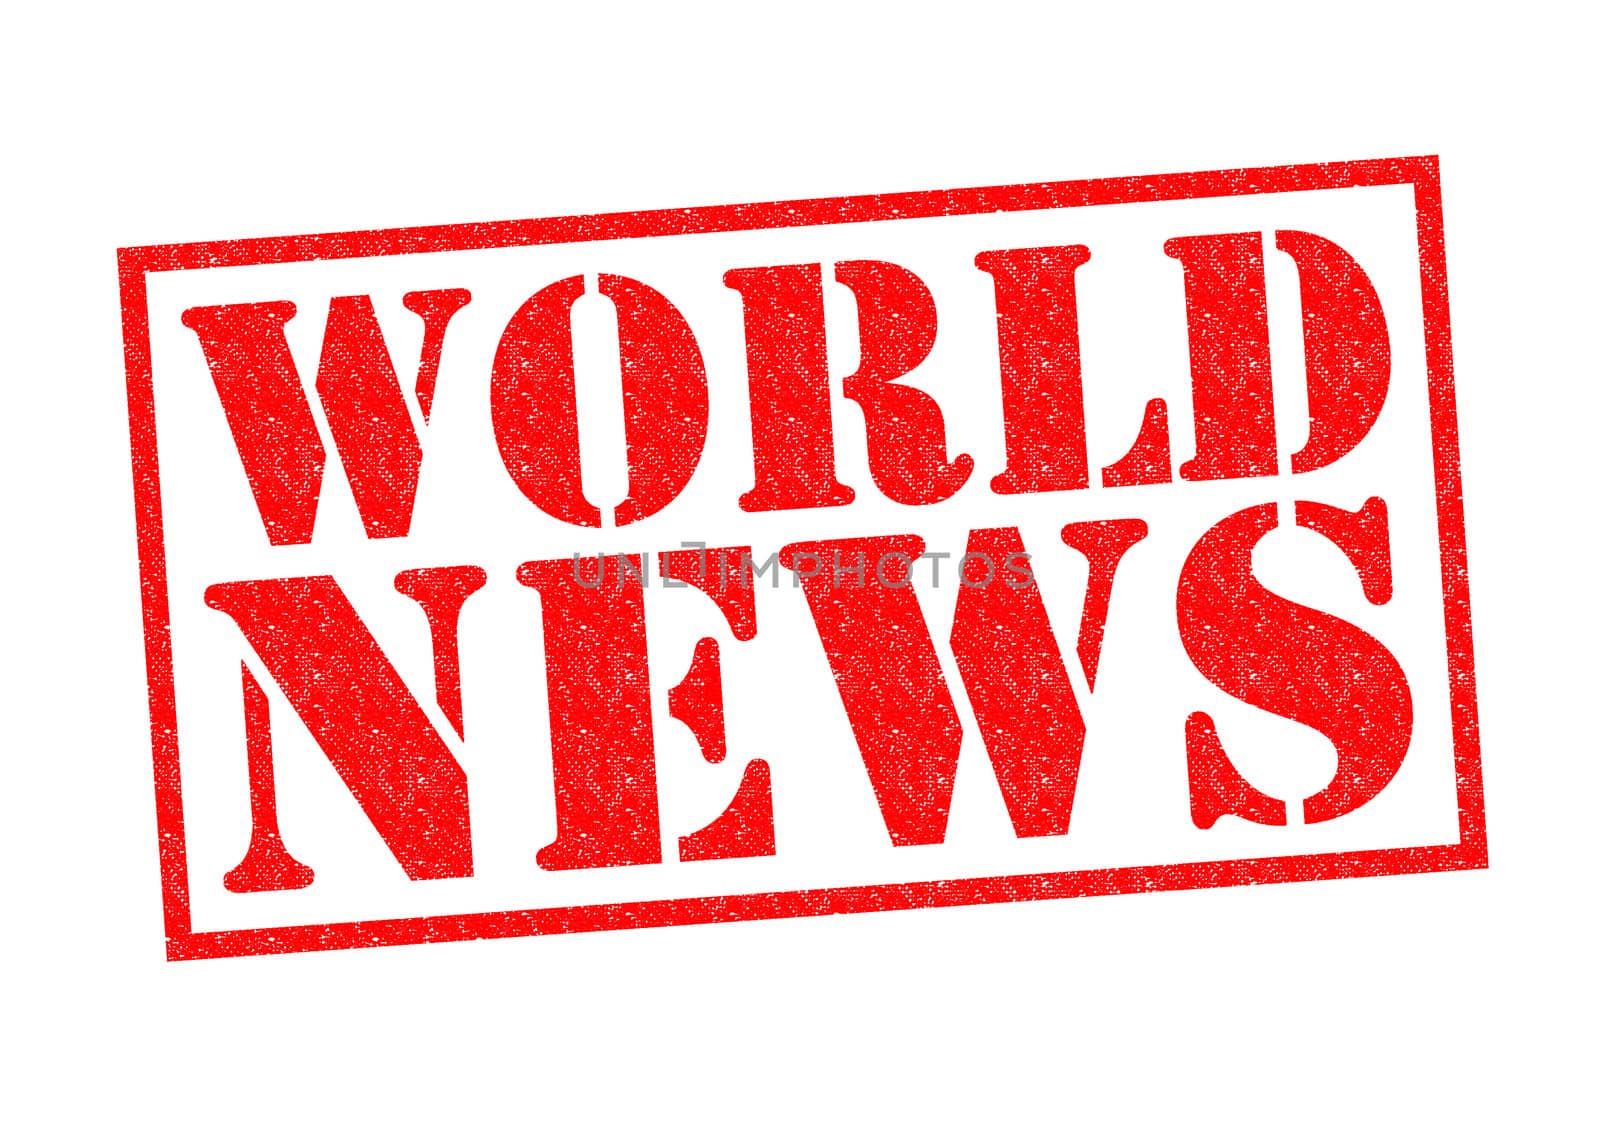 WORLD NEWS by chrisdorney